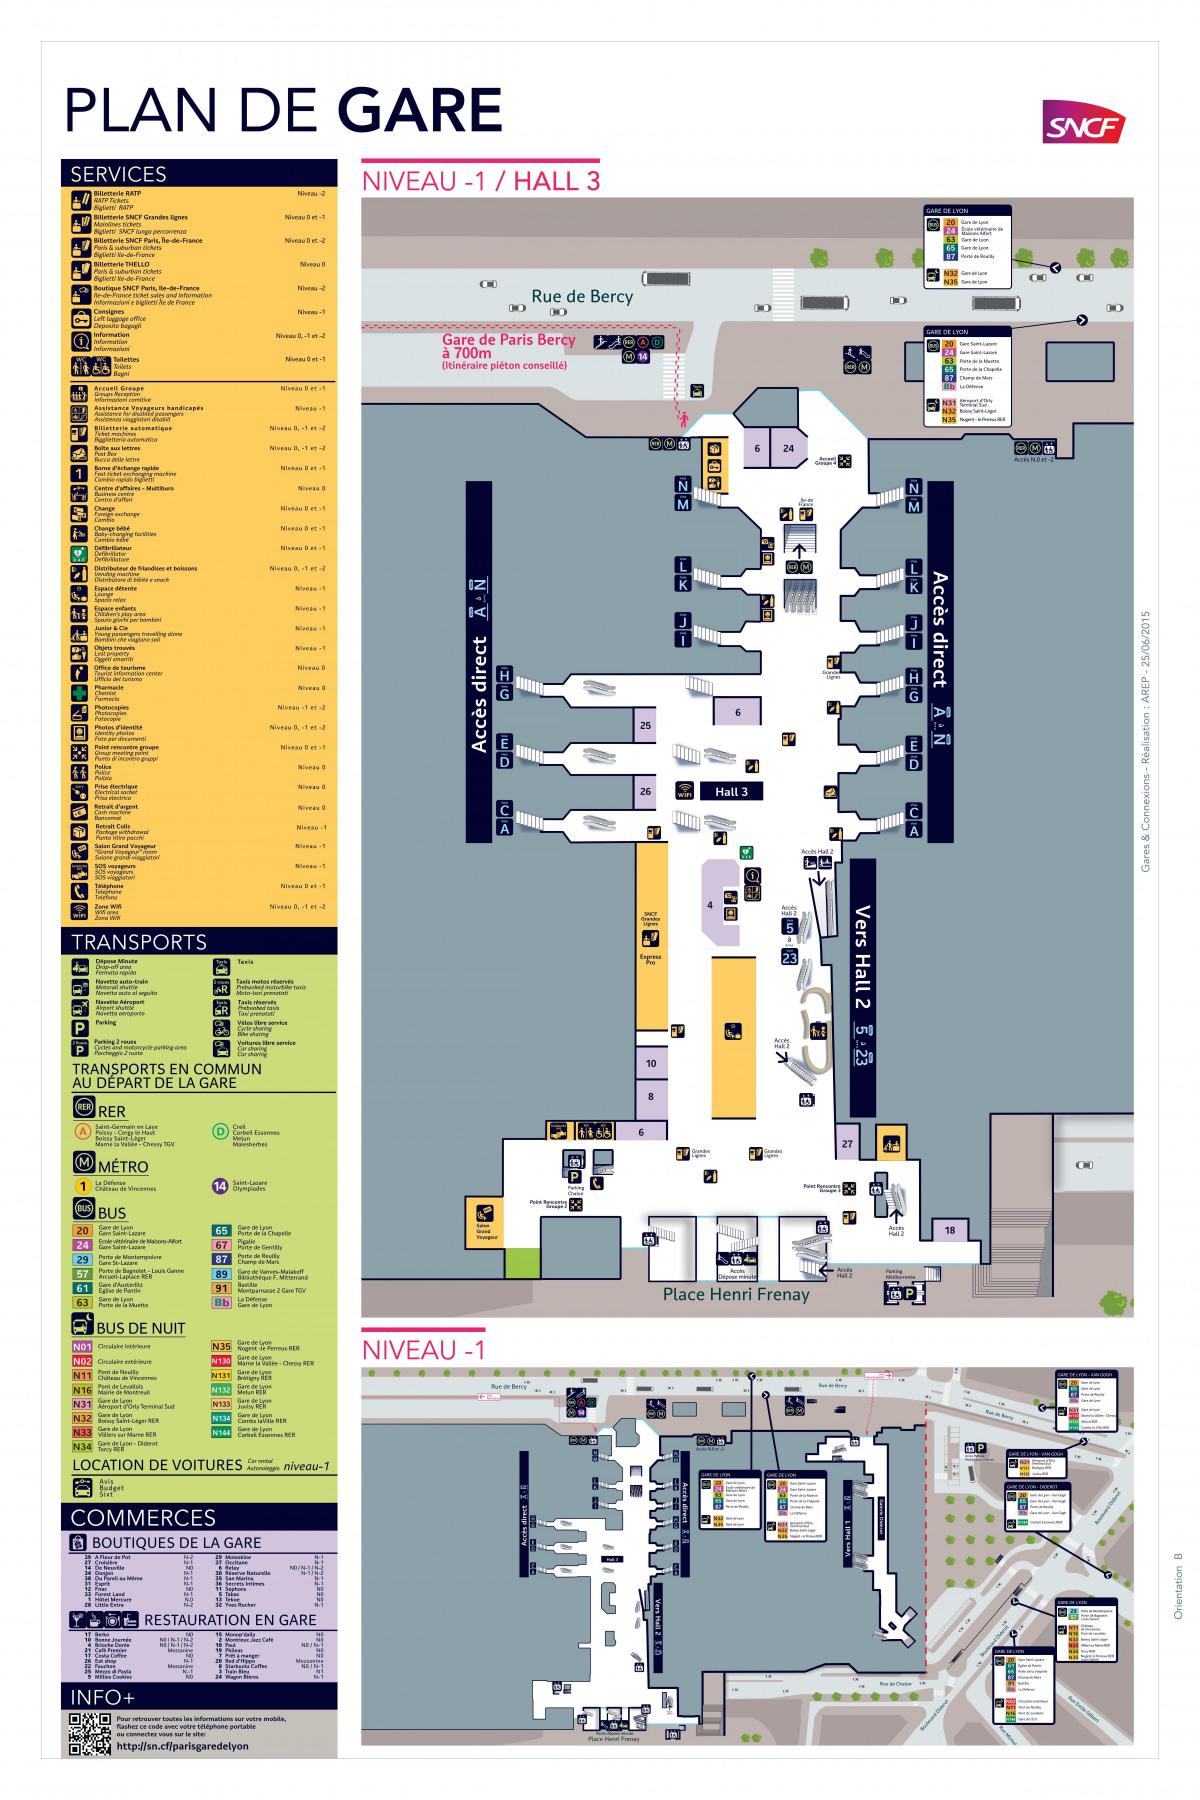 Bản đồ của Paris-Gare de Lyon Hall 3